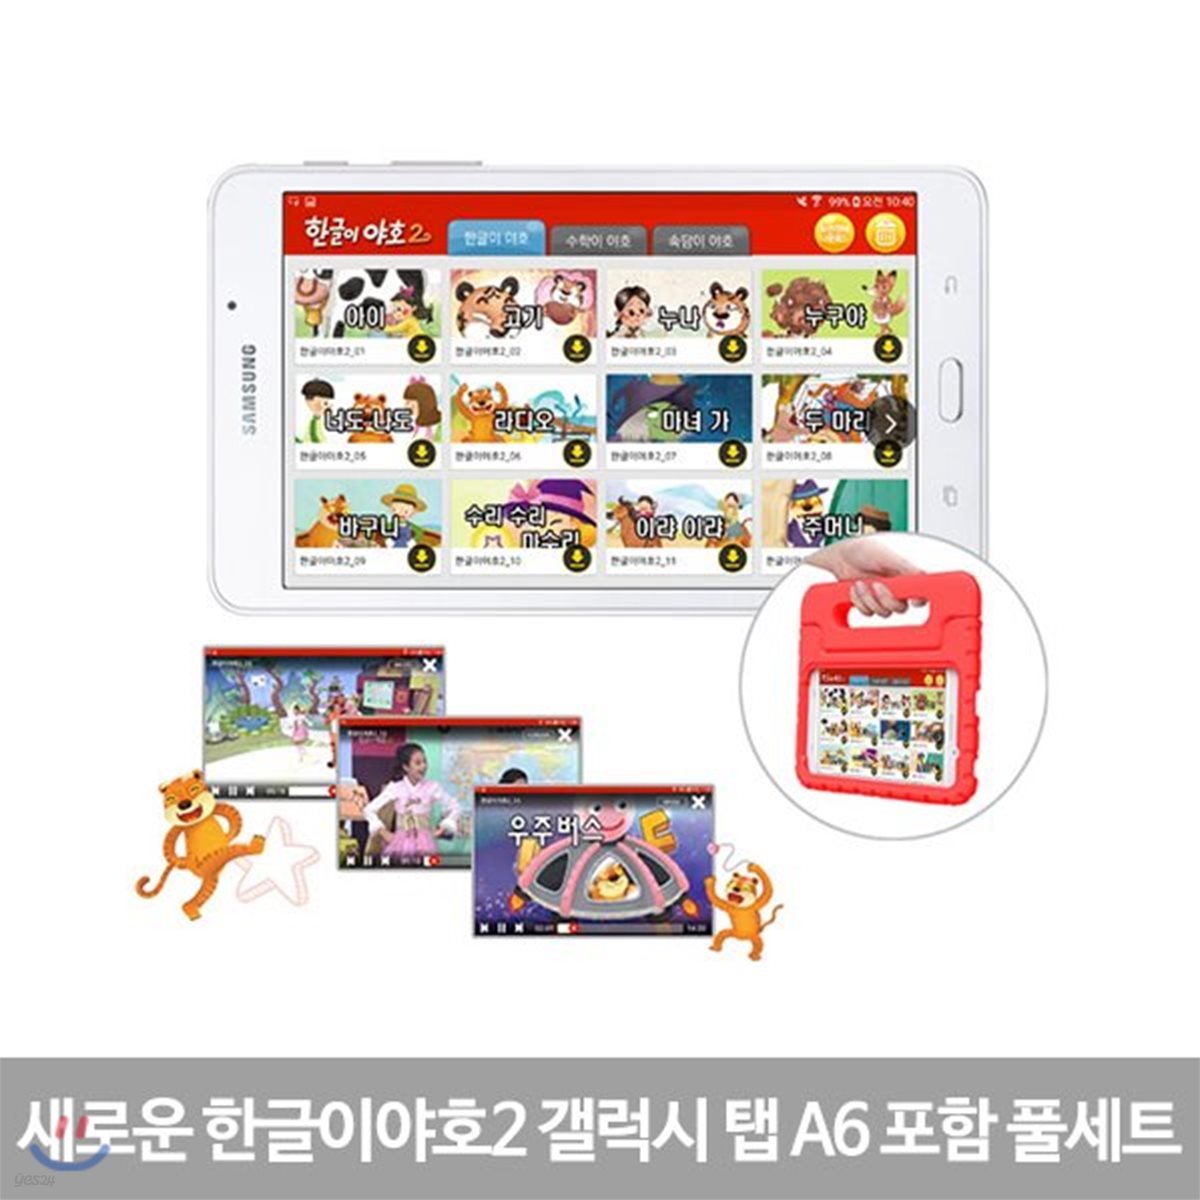 EBS 한글이야호 패드 (갤럭시탭 A6)+ 동영상 앱 이용권